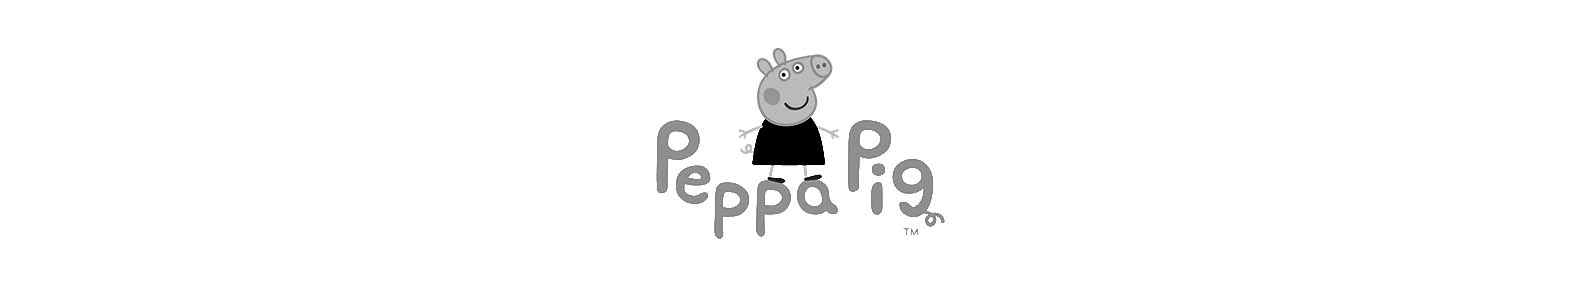 Peppa Pig brand header image